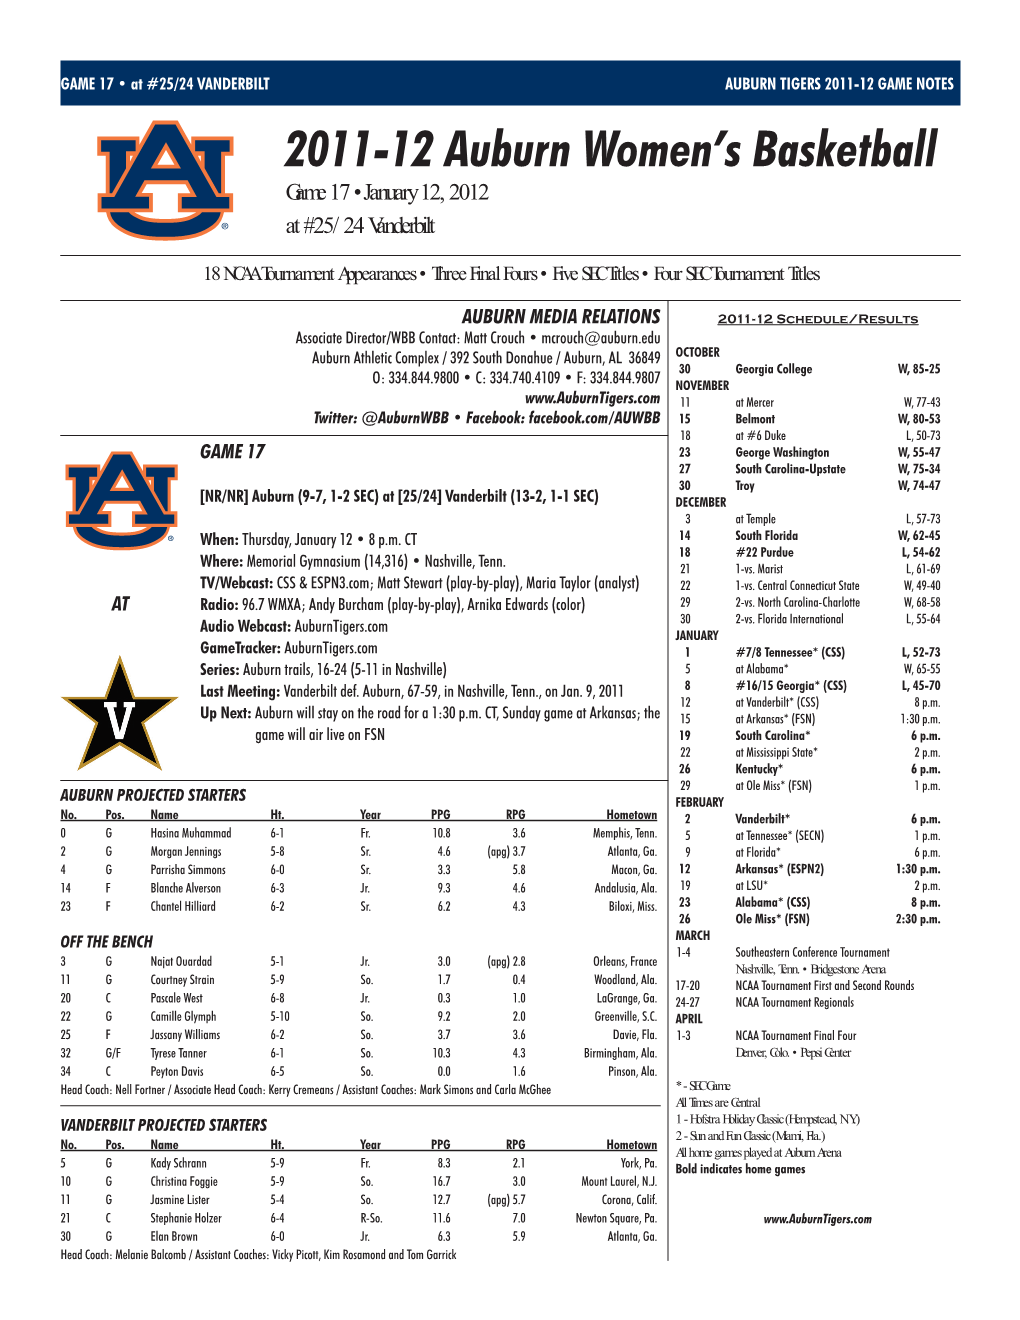 2011-12 Auburn Women's Basketball Auburn Combinedseason Team Road Statistics Statistics (As of Jan 09, 2012) Away Games